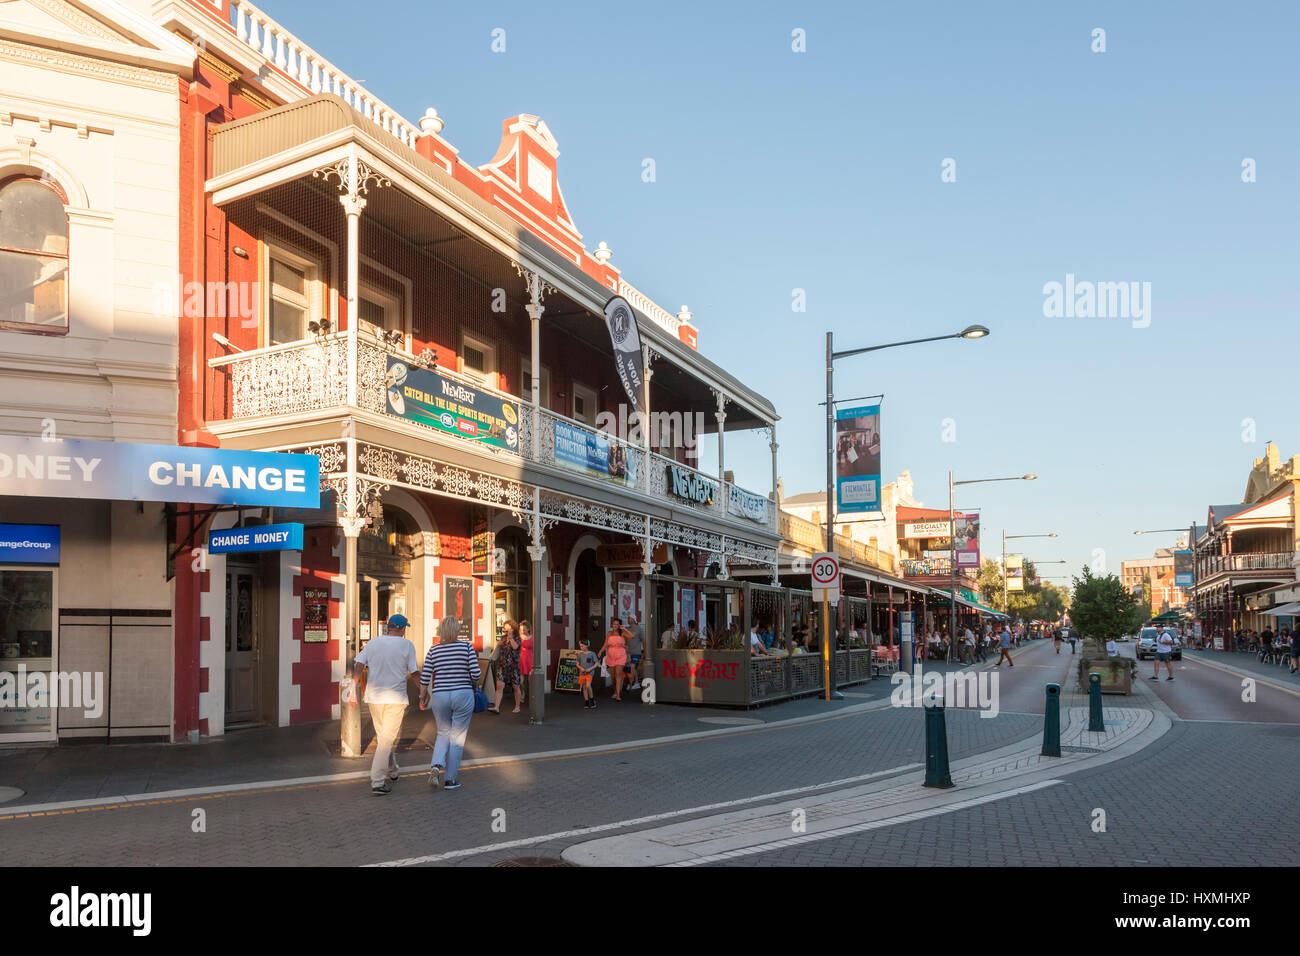 Fremantle Western Australia, outside the Newport hotel. Stock Photo